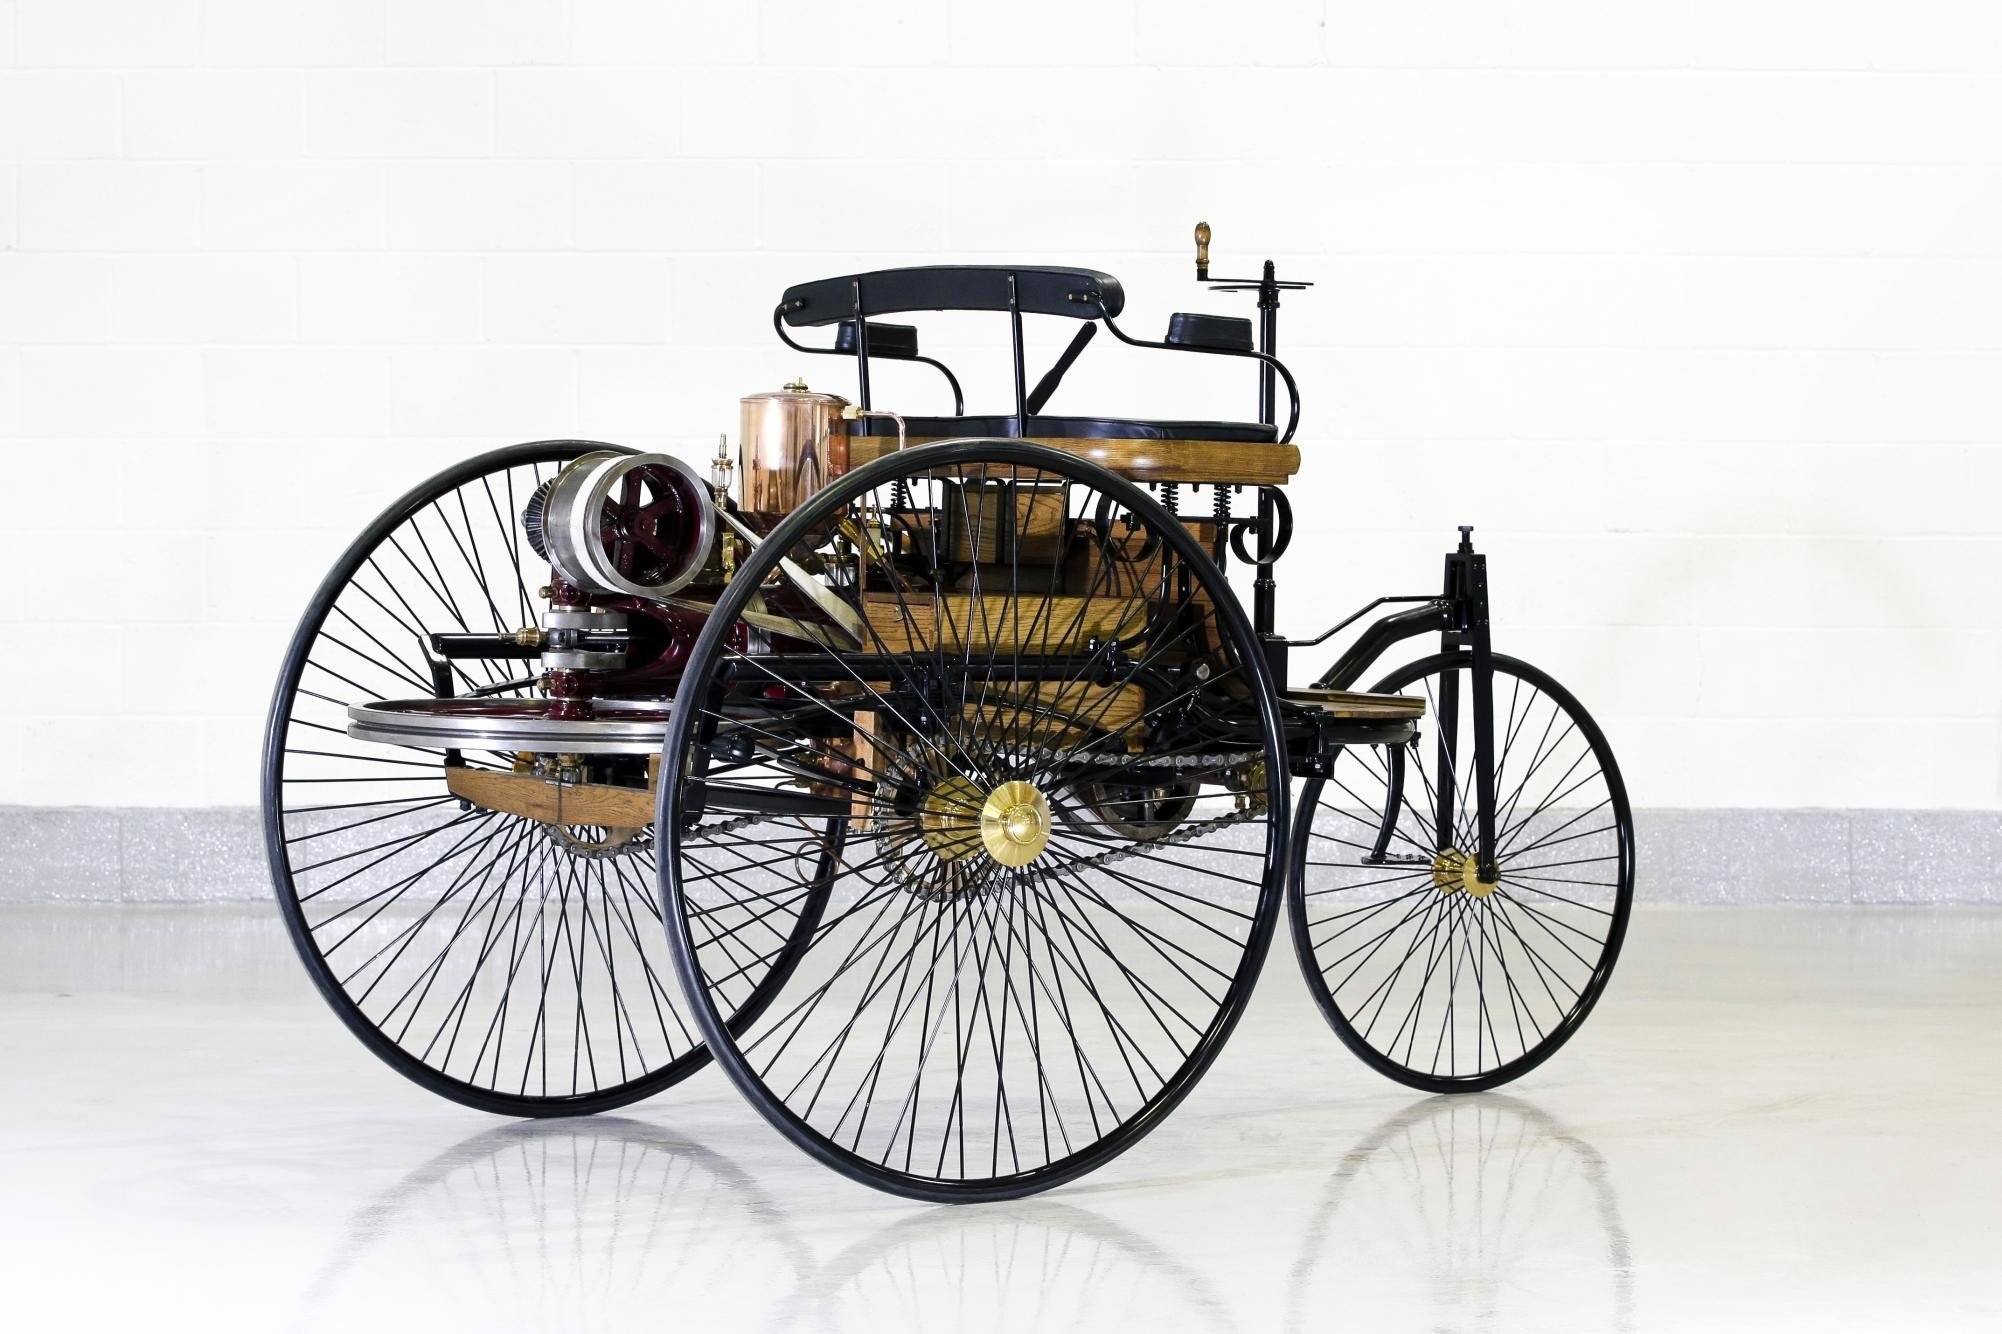 Пр 1 машина. Benz Patent-Motorwagen 1886. Benz Patent-Motorwagen 1886 двигатель.